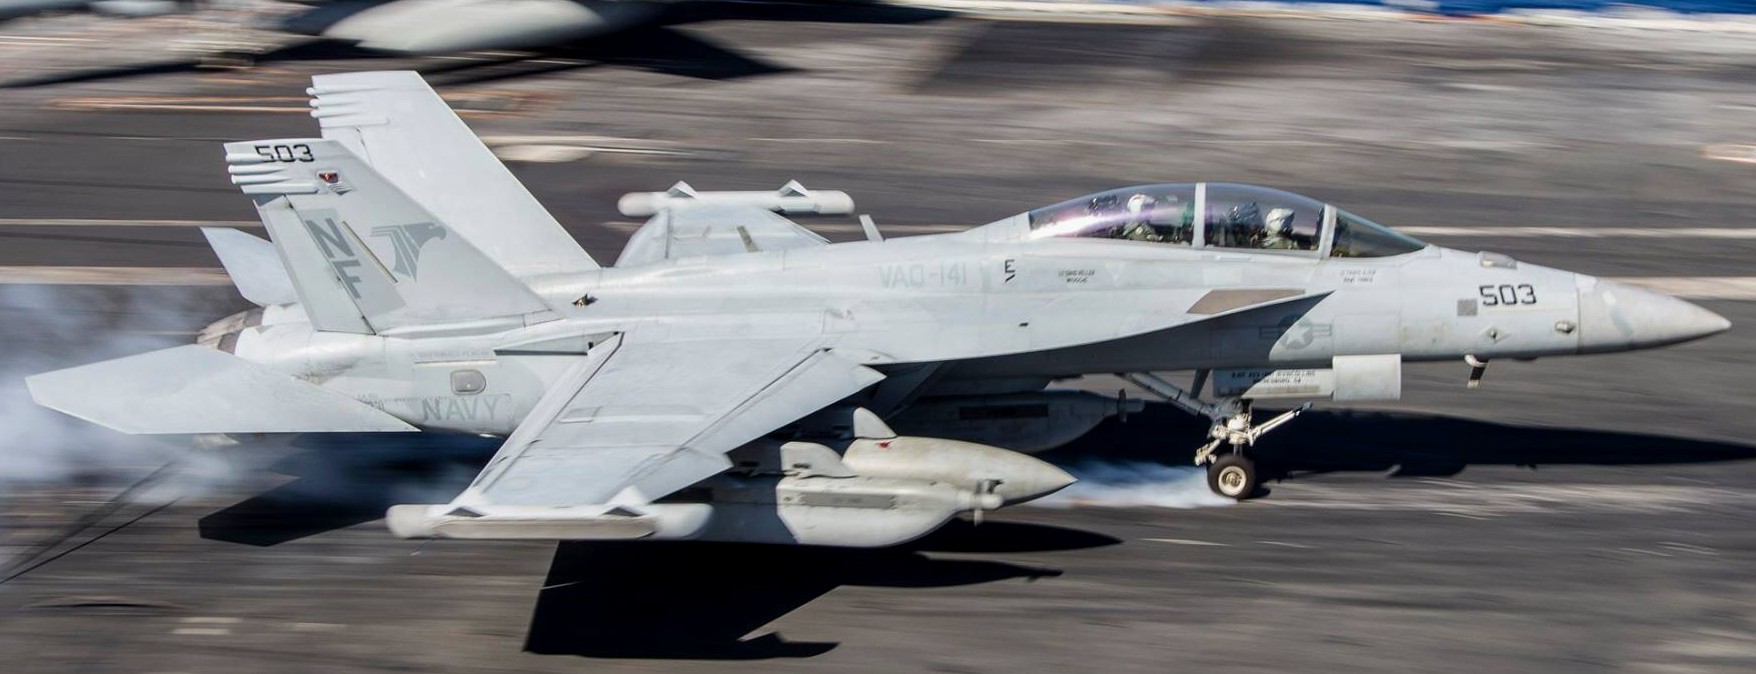 vaq-141 shadowhawks electronic attack squadron boeing ea-18g growler us navy cvw-5 uss ronald reagan cvn-76 79